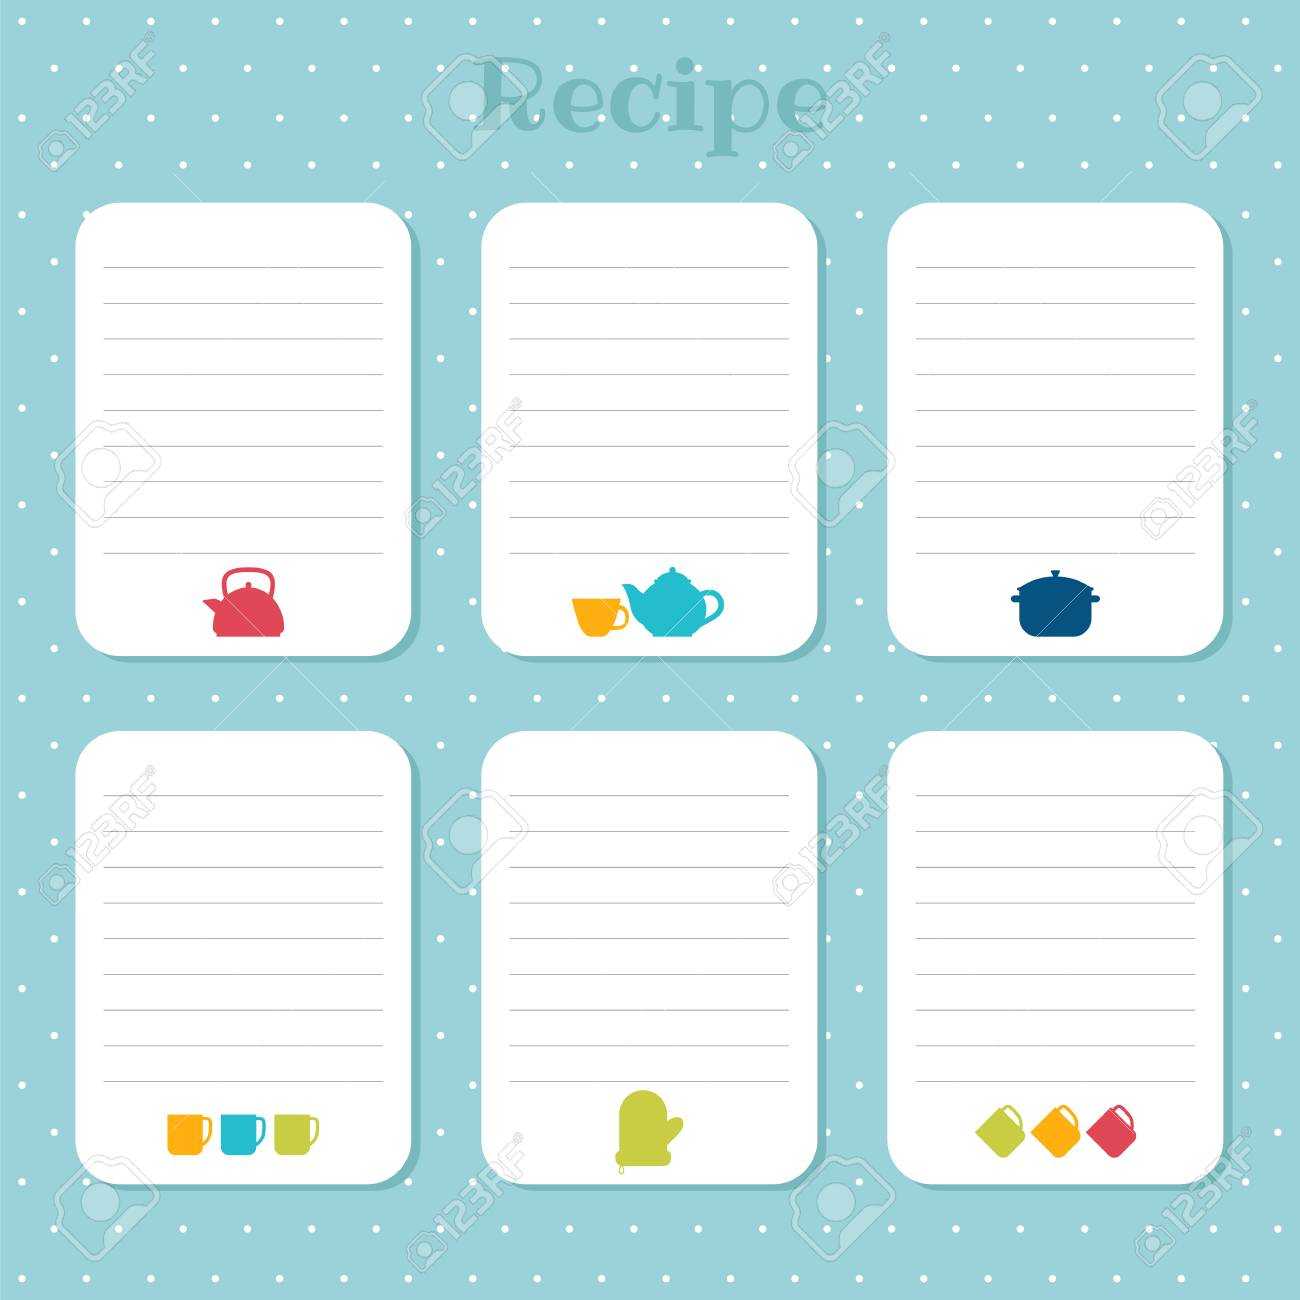 Recipe Cards Set. Cooking Card Templates. For Restaurant, Cafe,.. Regarding Restaurant Recipe Card Template